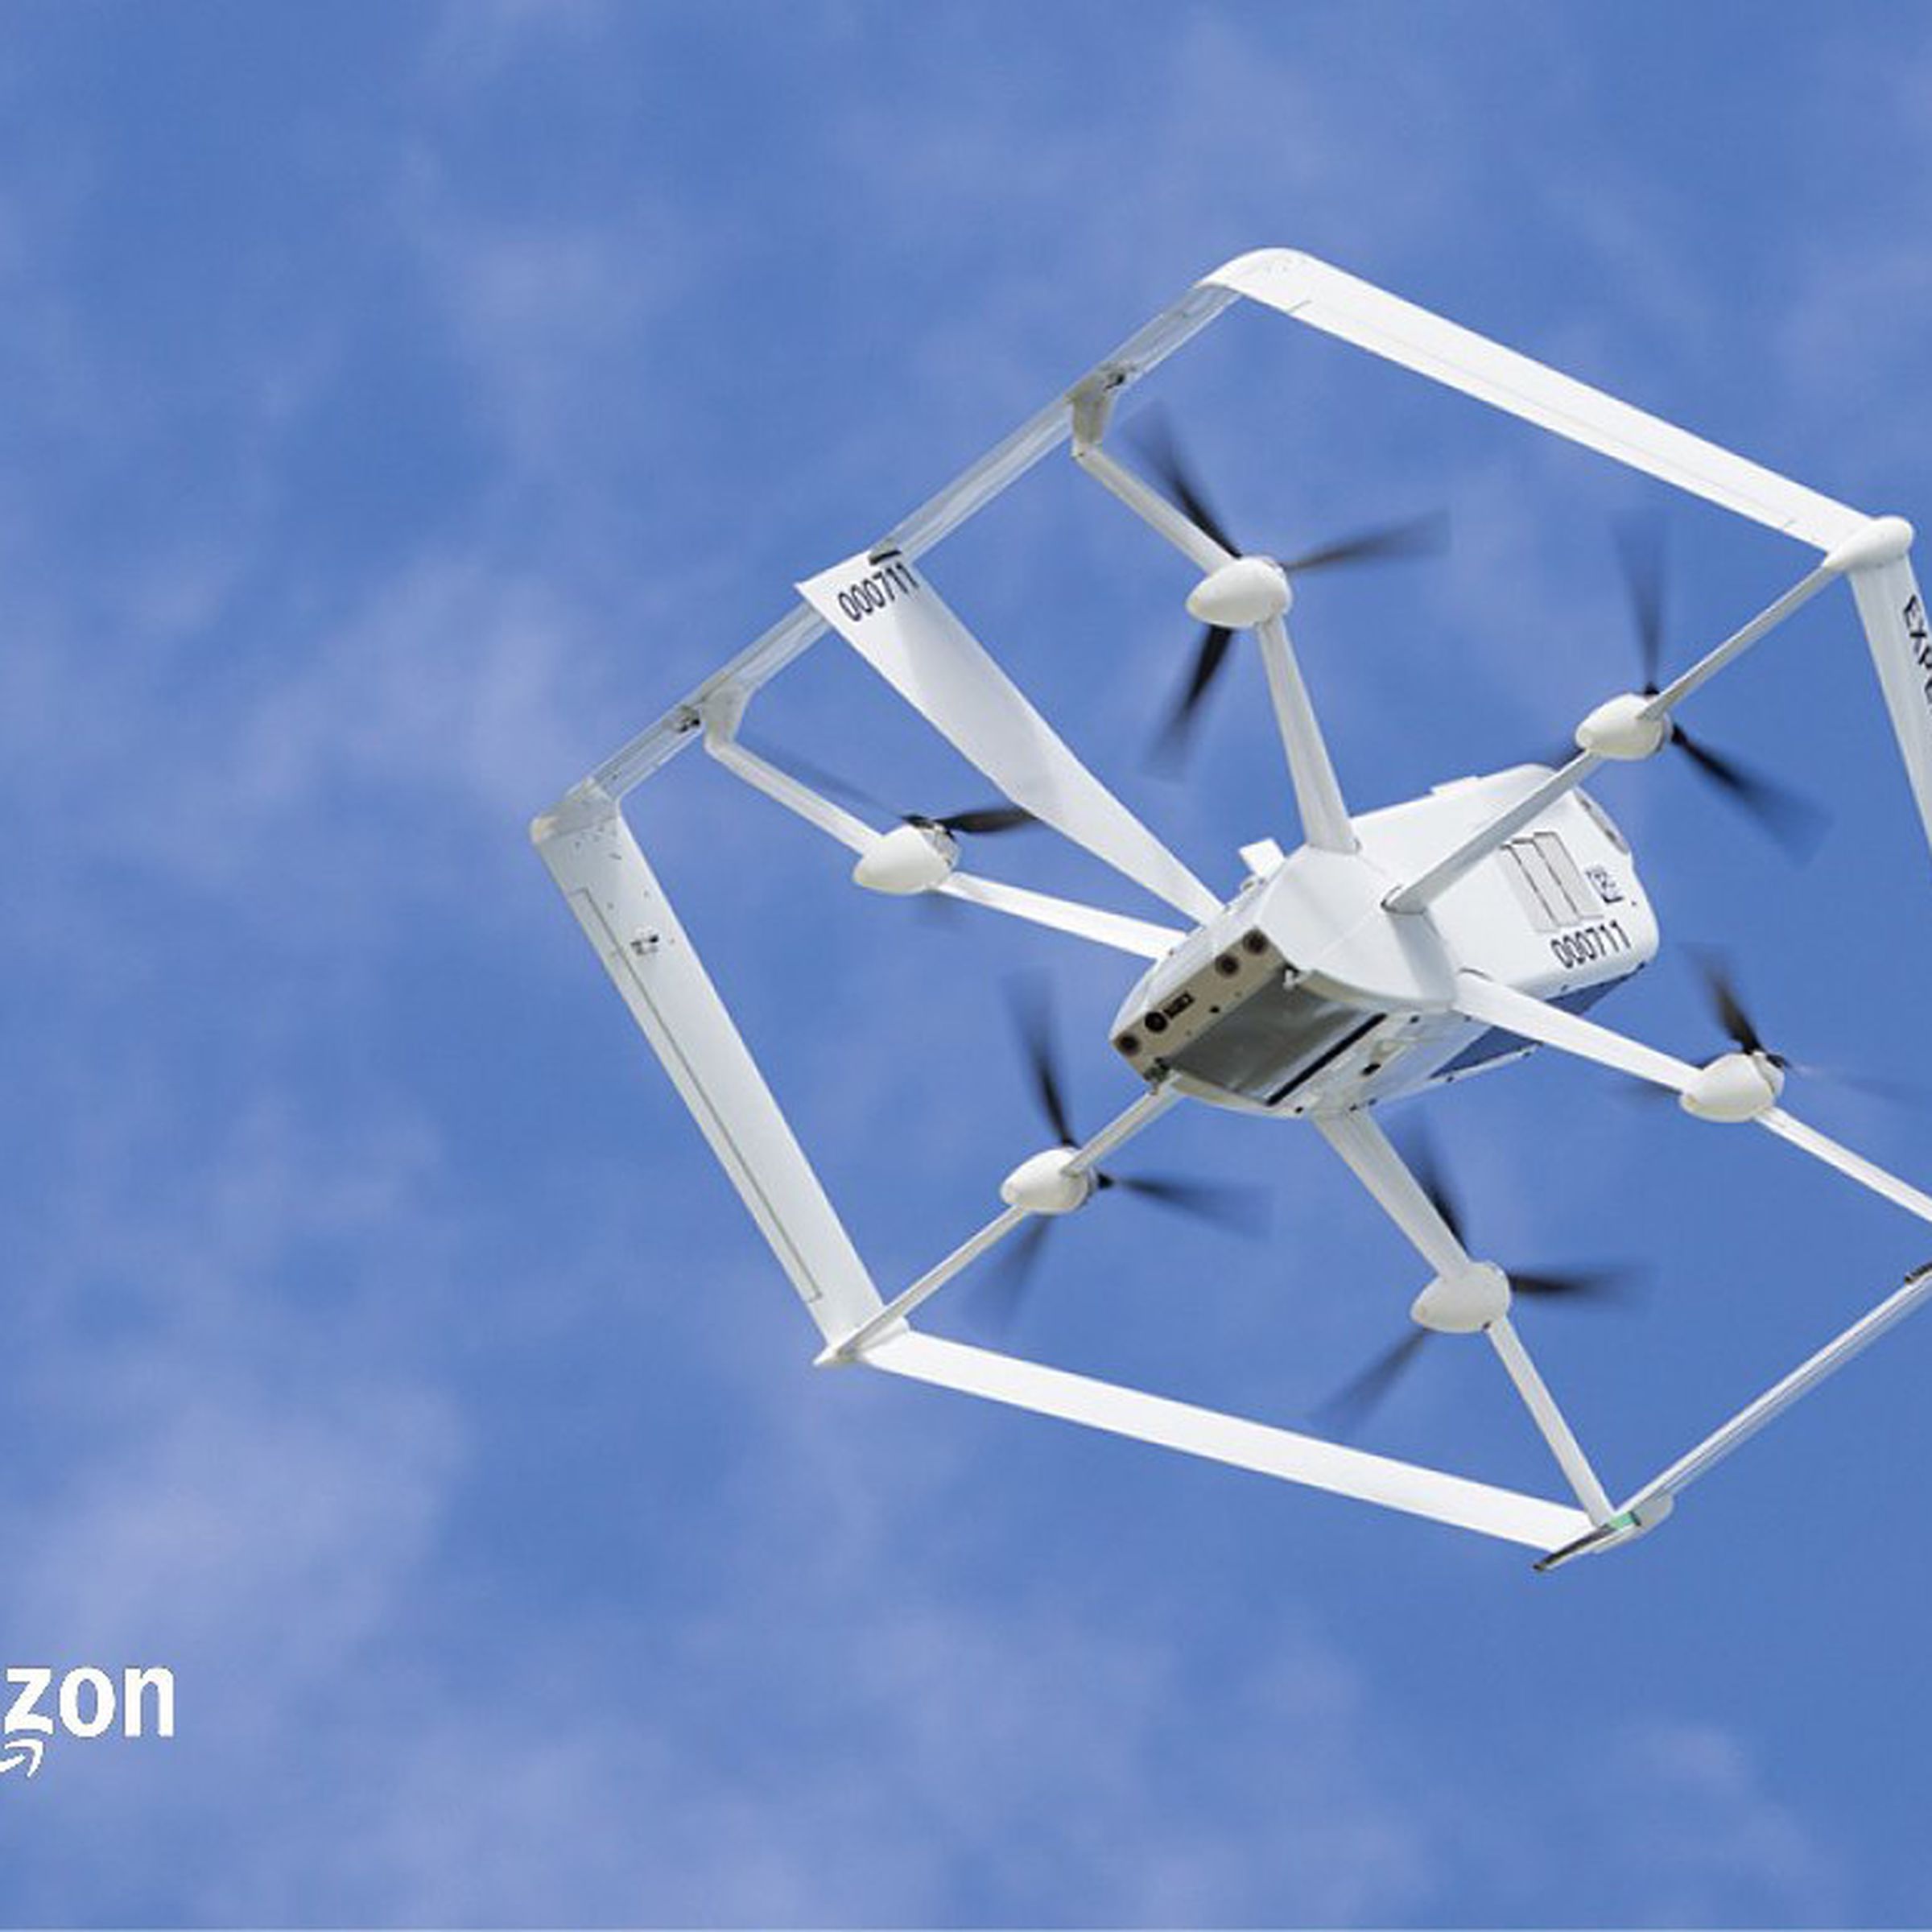 Amazon’s hexagonal MK27-2 delivery drone.